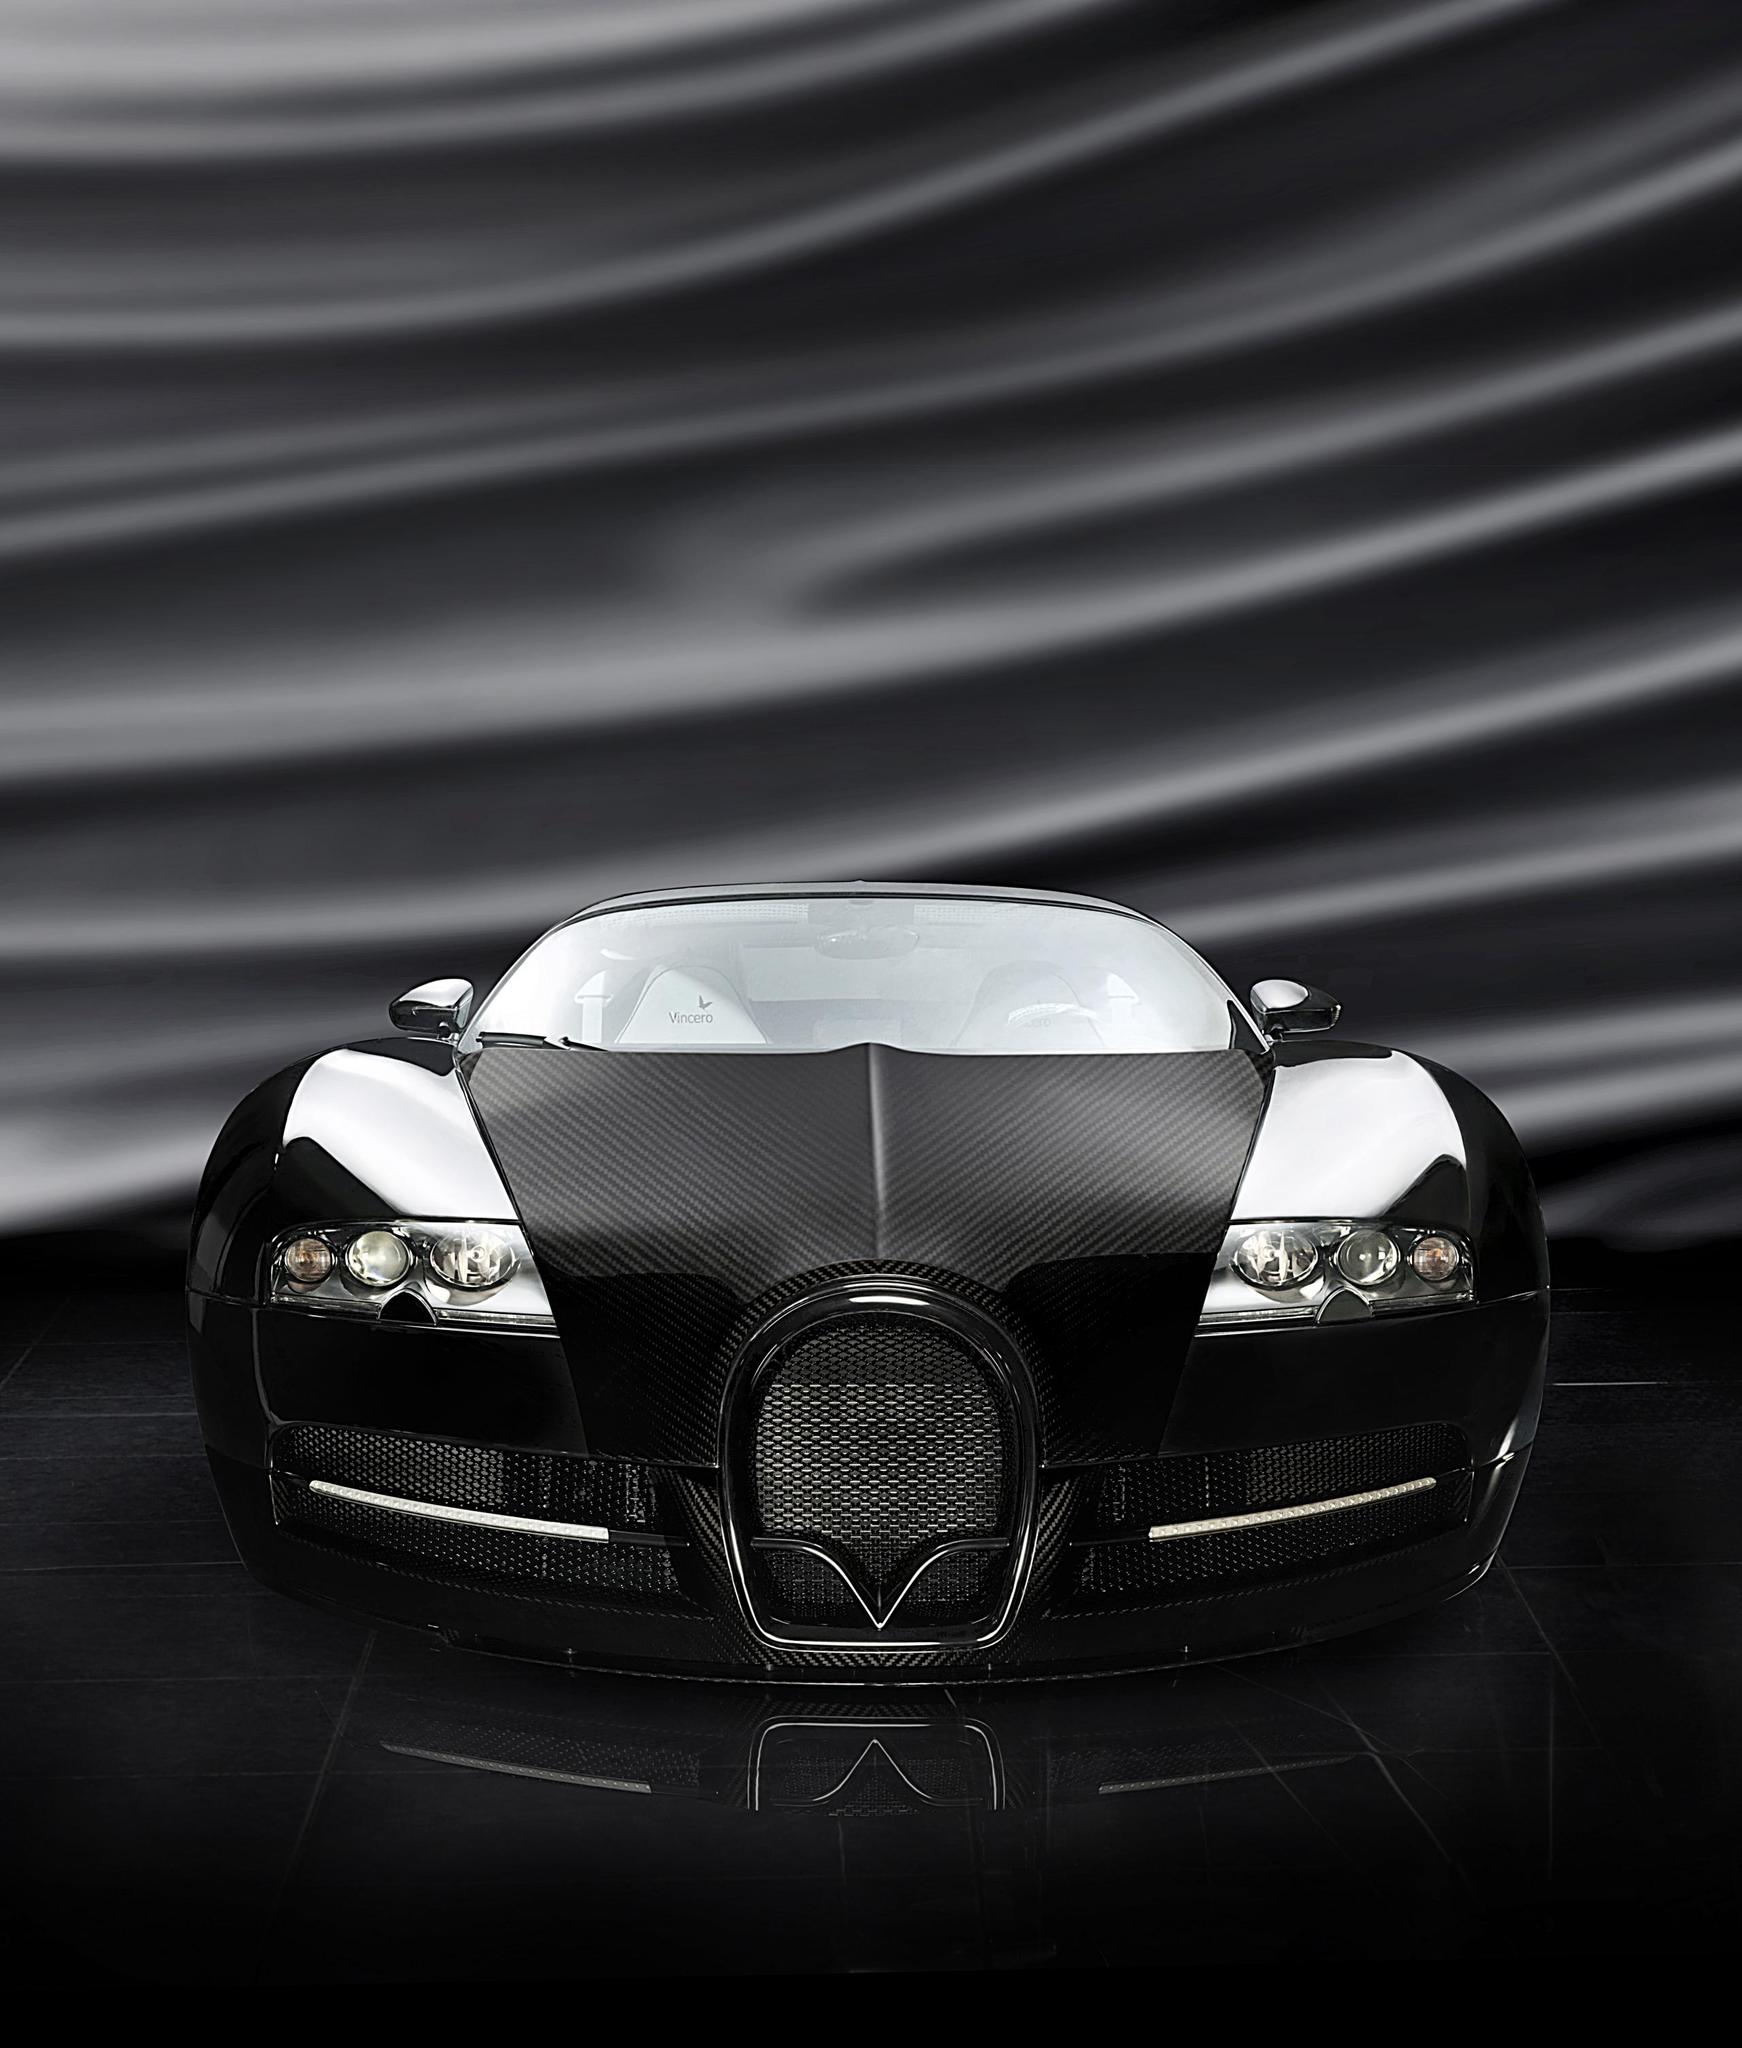 Mansory body kit for Bugatti Veyron latest model